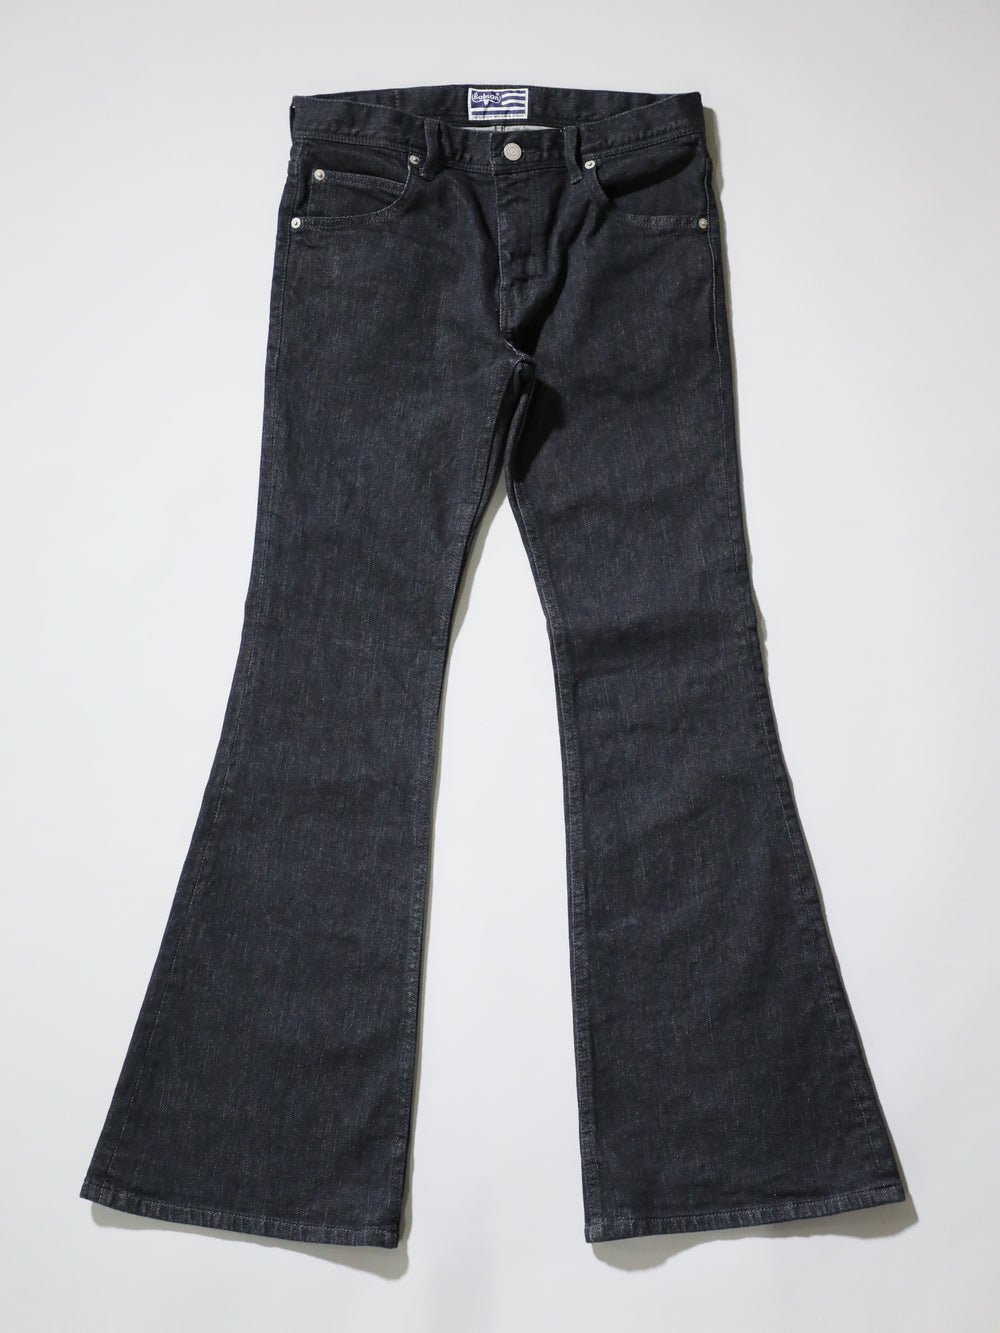 Zimbabwe Cotton Bell Bottom Jeans Black Color Denim/Unisex